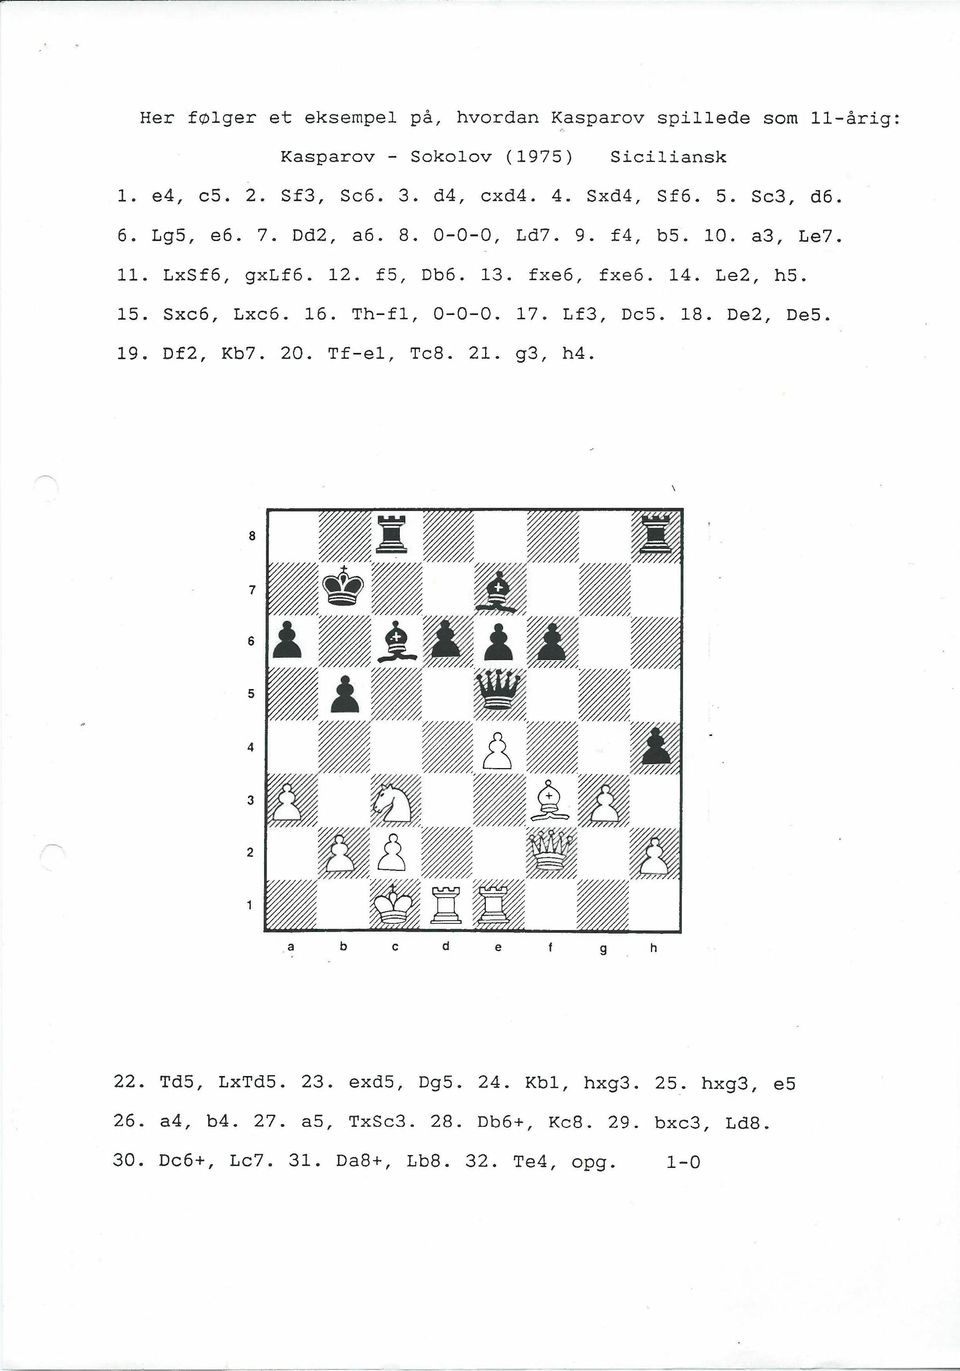 Le2, h5. 15. Sxc6, Lxc6. 16. Th-fl, 0-0-0. 17. Lf3, Dc5. 18. De2, De5. 19. Df2, Kb7. 20. Tf-el, Tc8. 21. g3, h4. 22. Td5, LxTd5. 23.